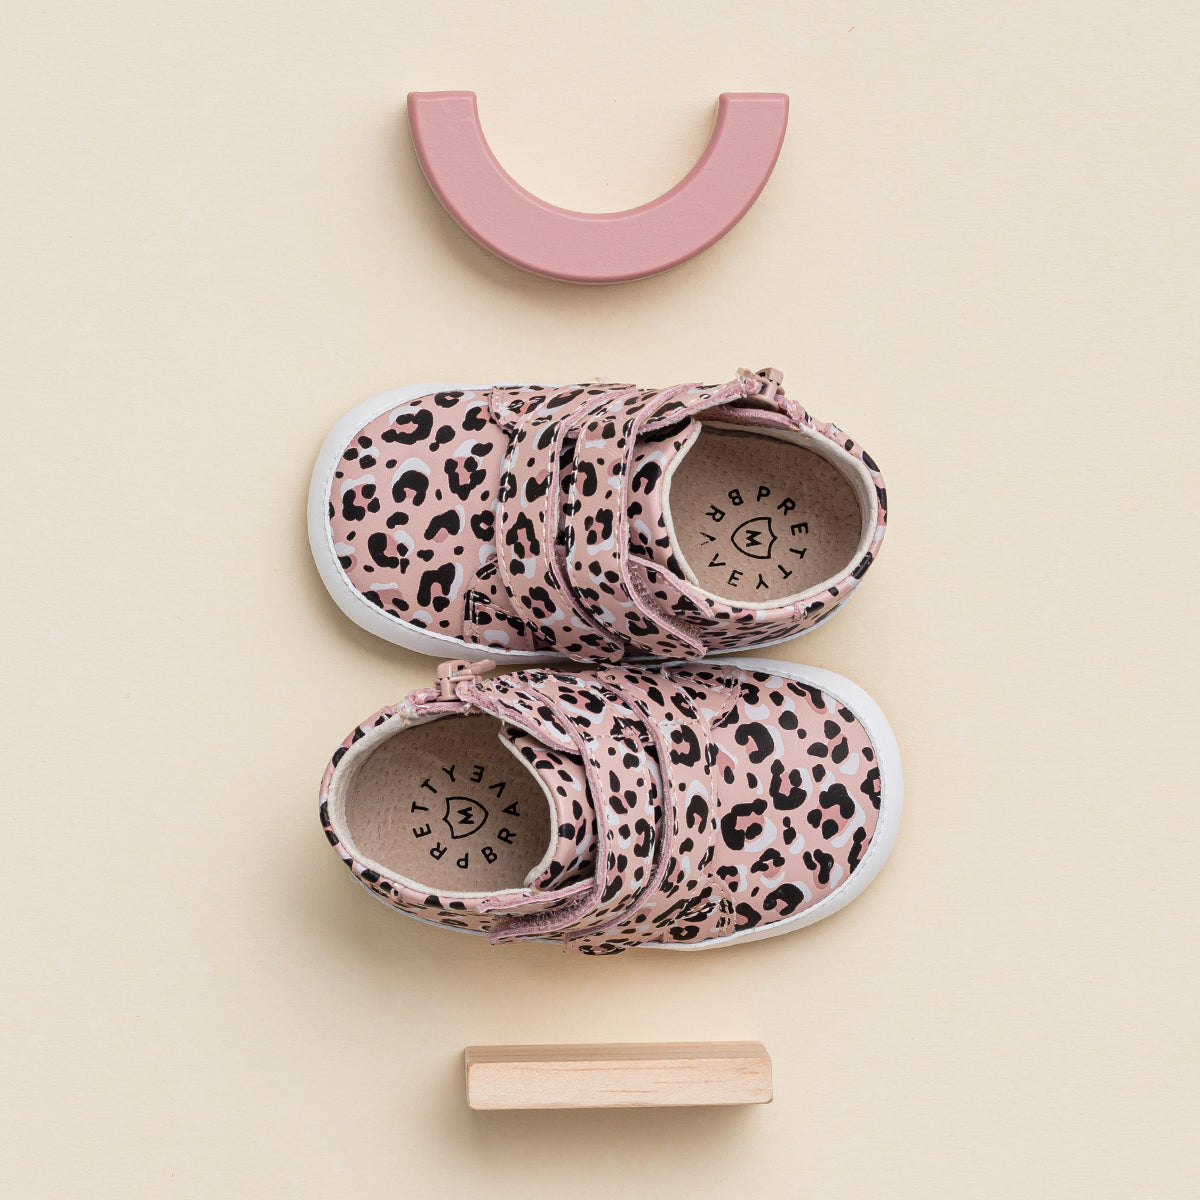 Top view of Hi Top shoe in leopard print next to wooden shoe